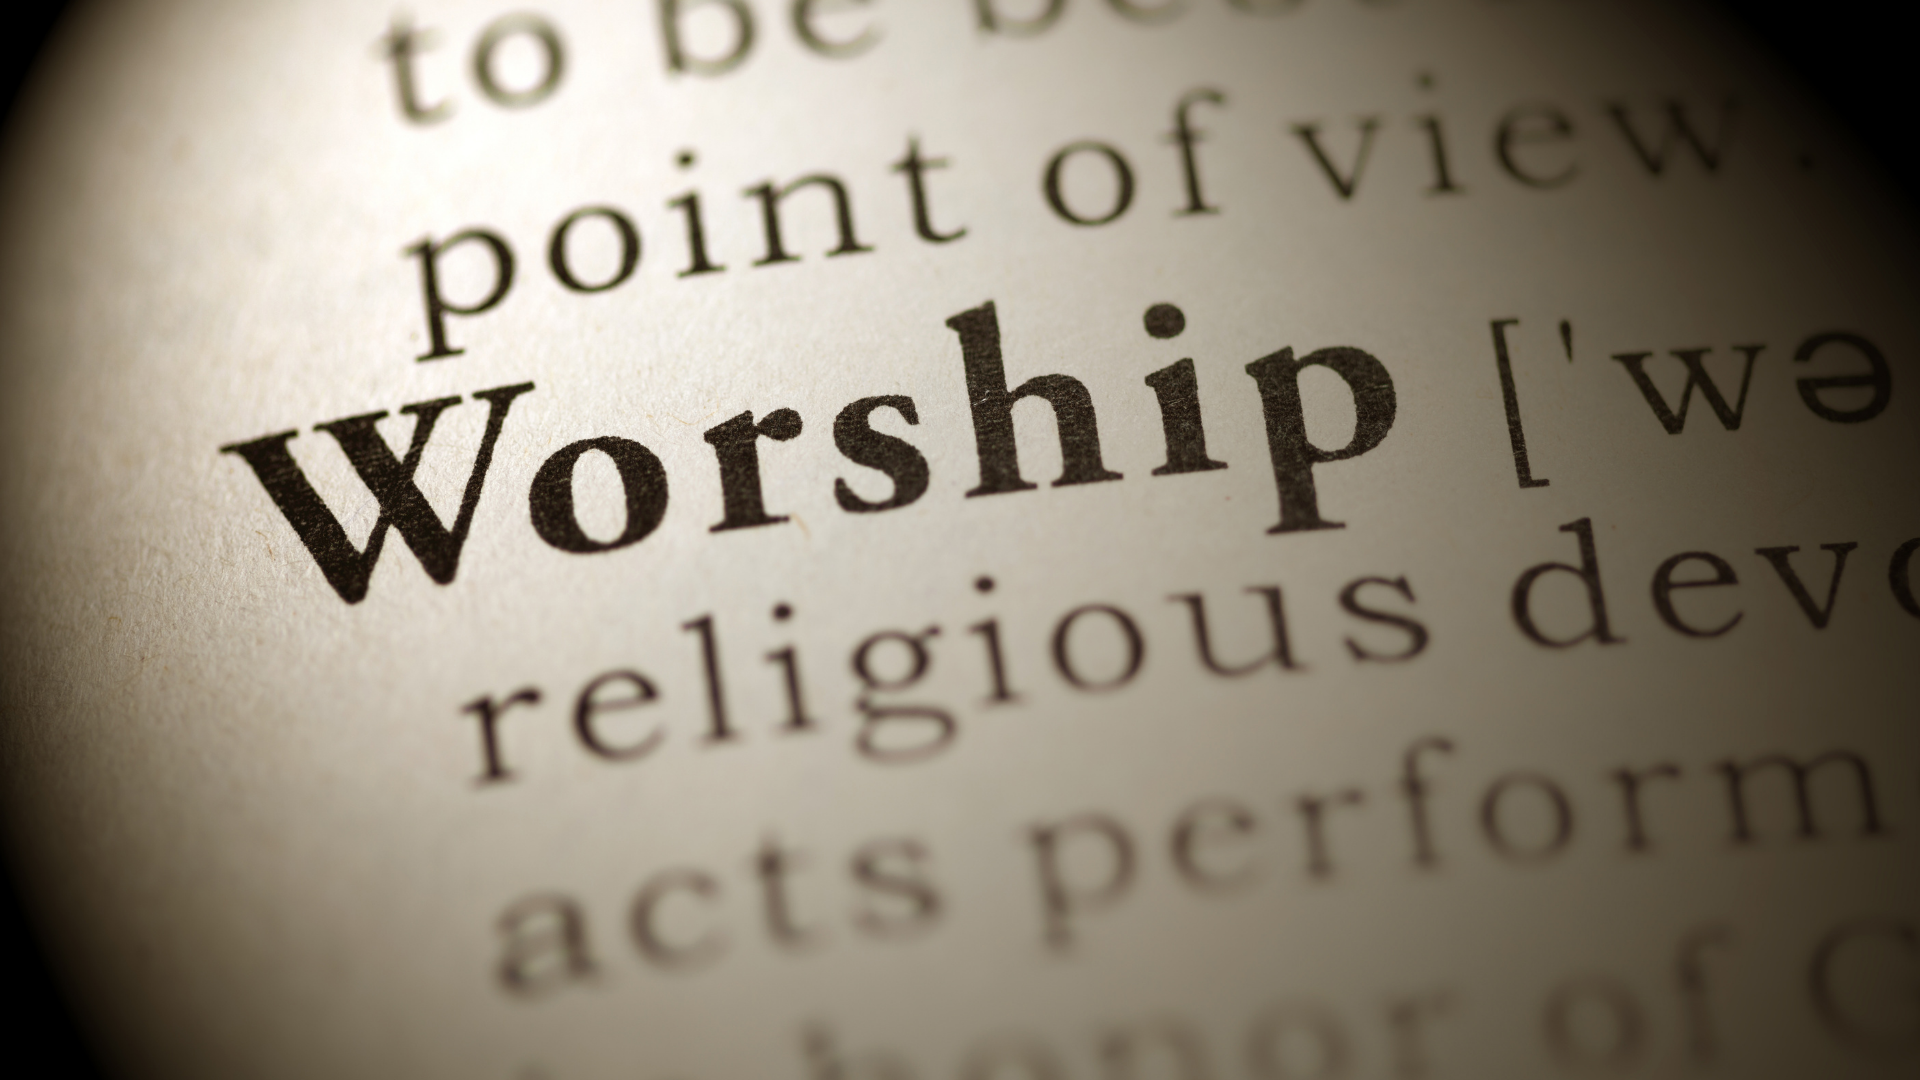 Ministry worship